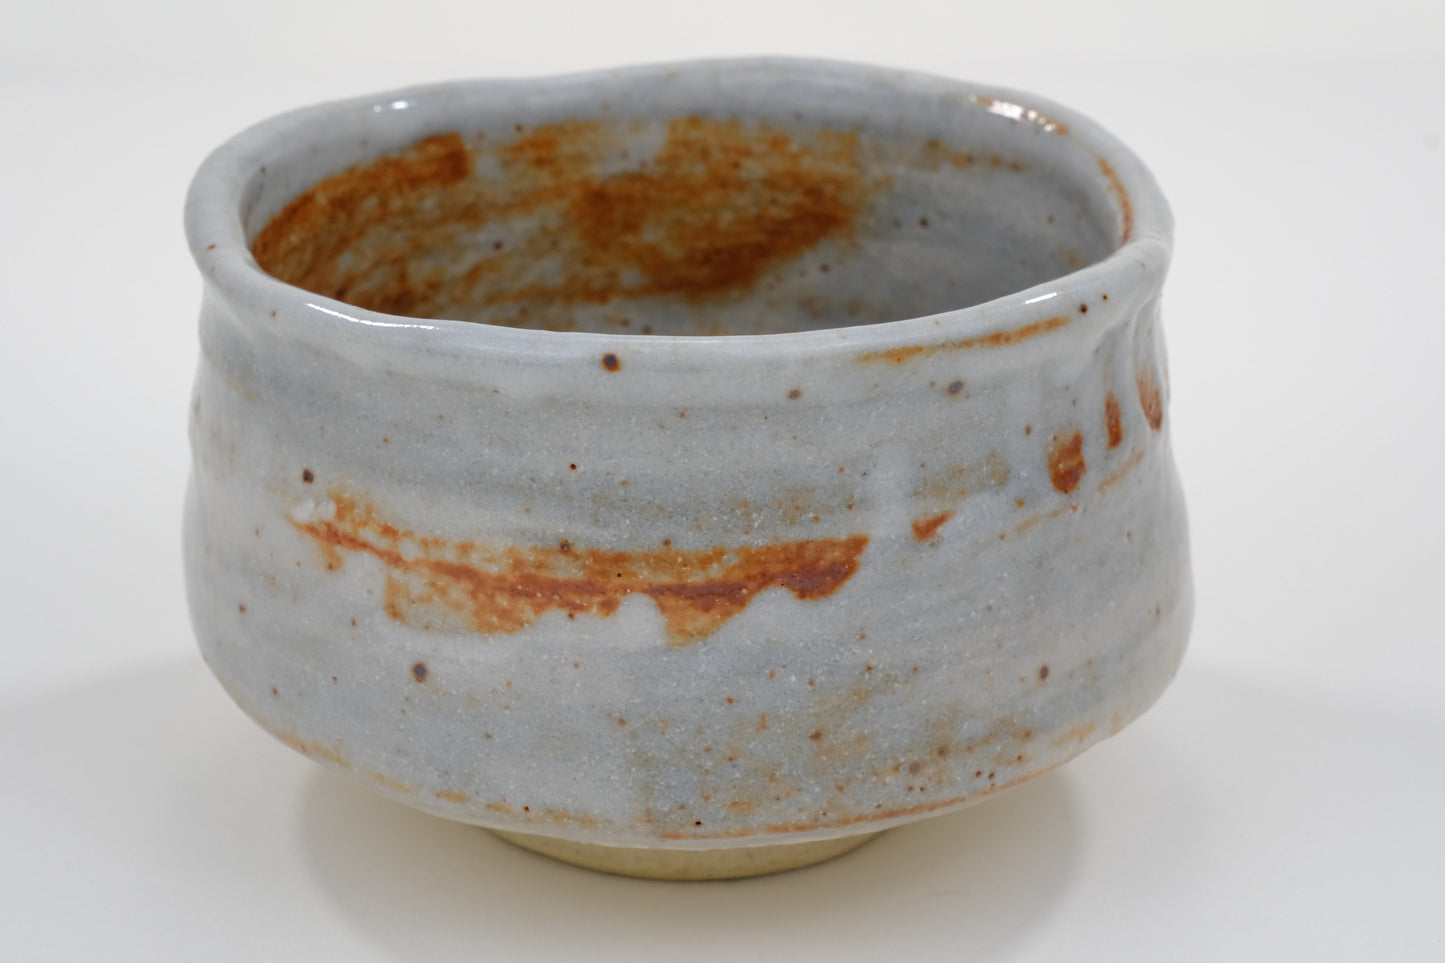 Vintage Japanese Hand Thrown Ceramic Tea Bowl Chawan 5"